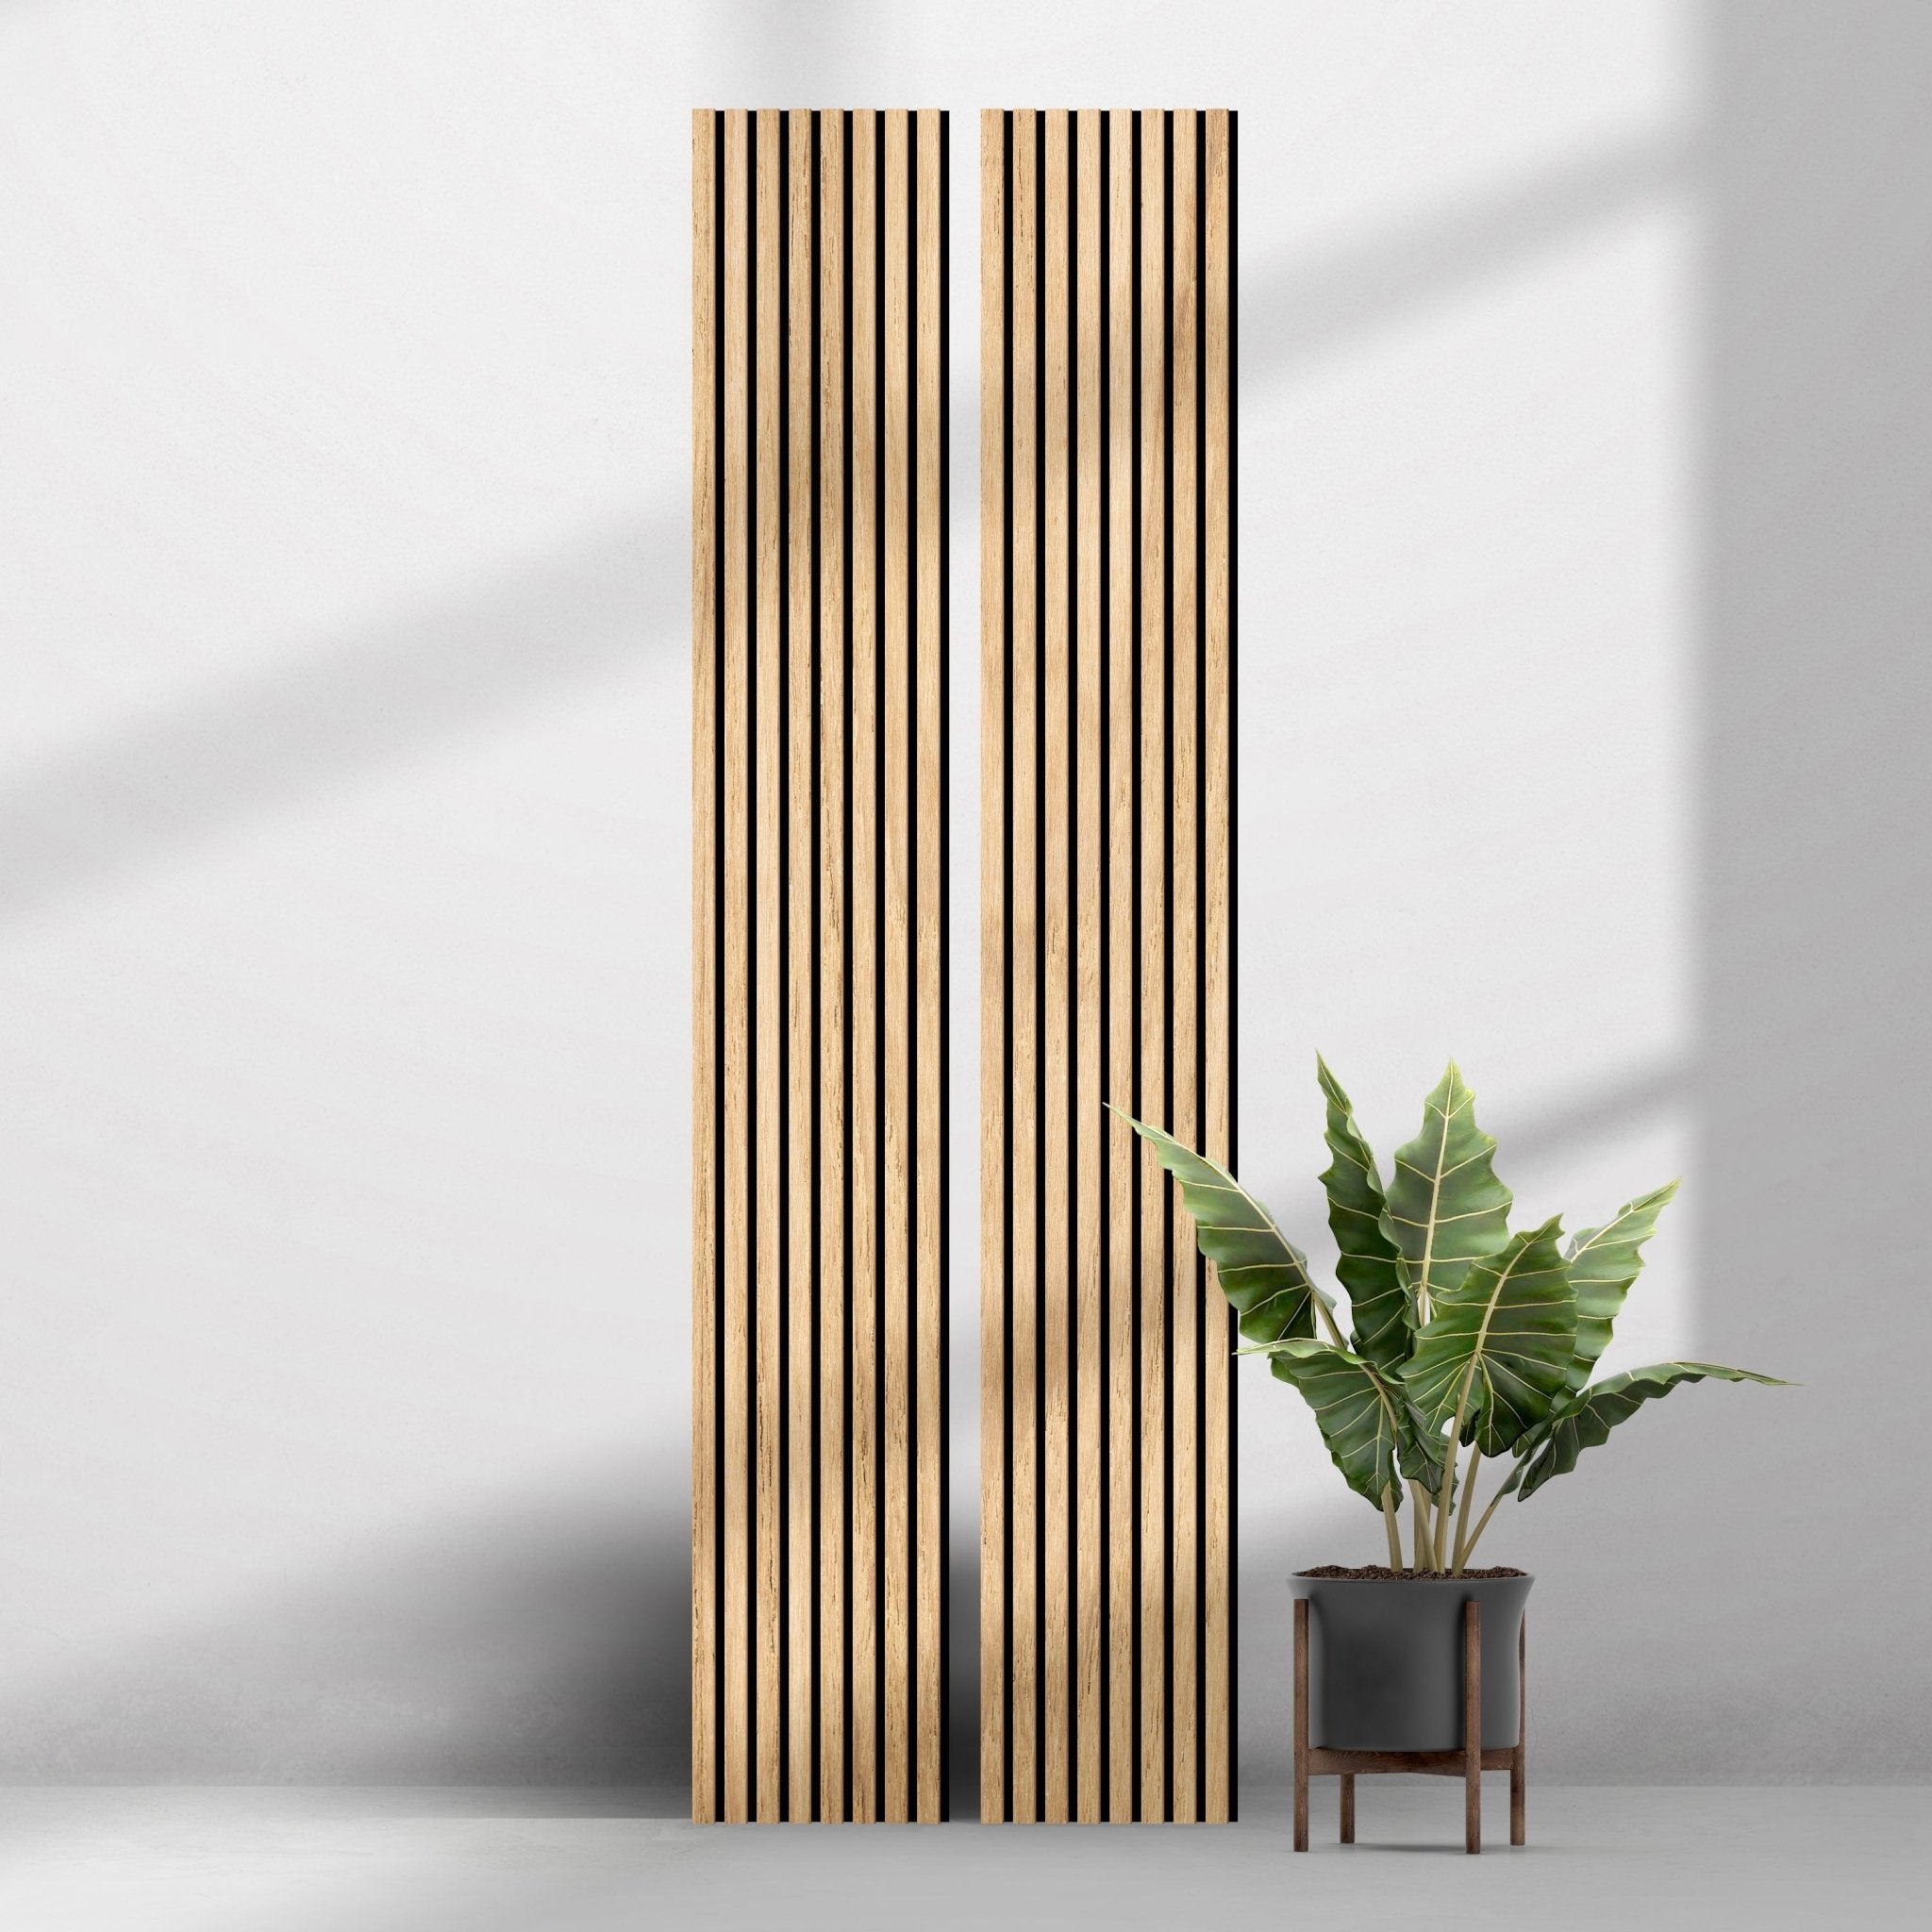 Wood Slat Acoustic Panel in Natural White Oak, Black Felt - Slats.co